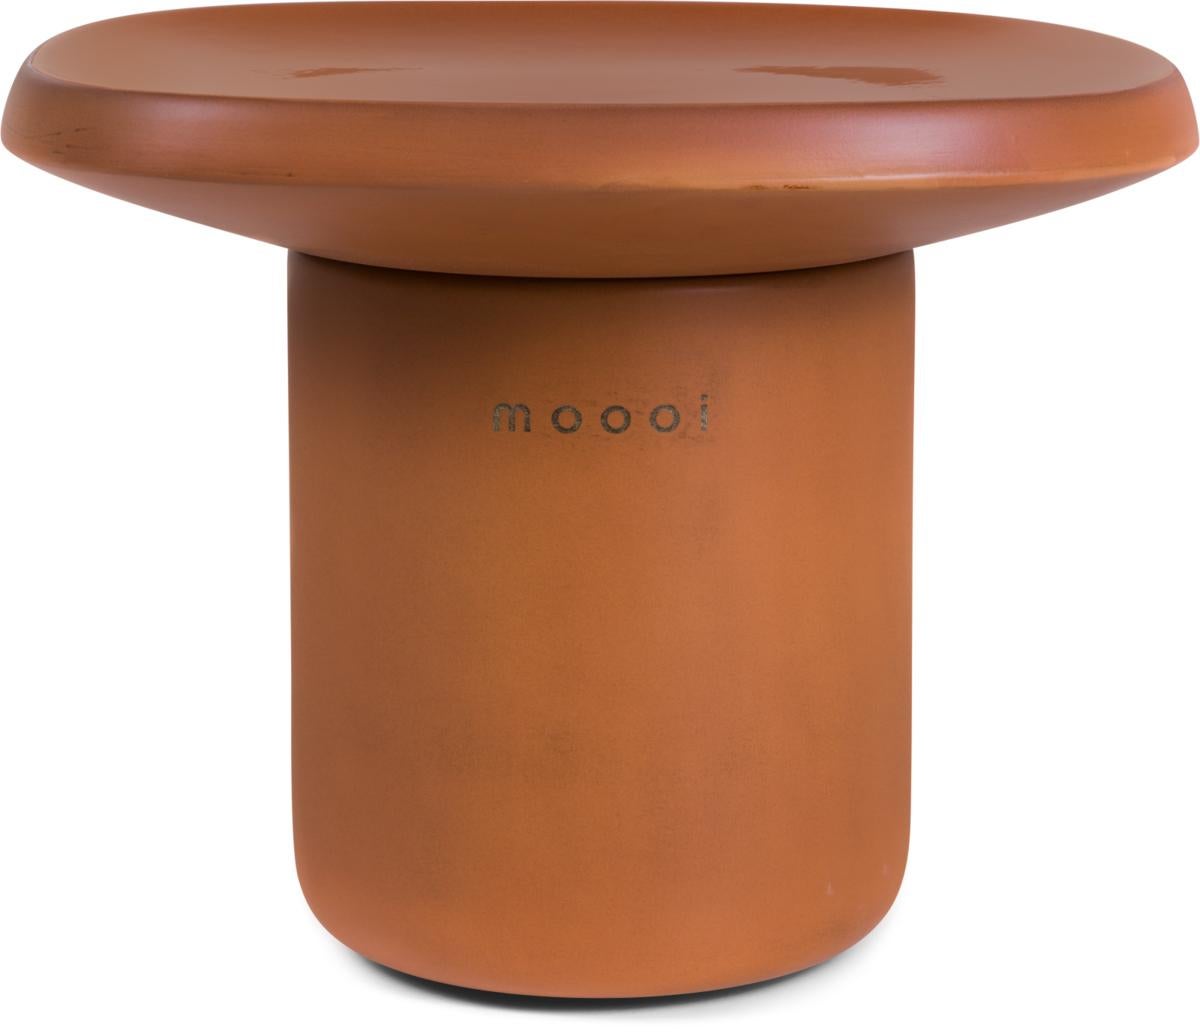 Moooi Obon Rectangular Low Ceramic Table in Terracotta Finish by Simone Bonanni For Sale 2